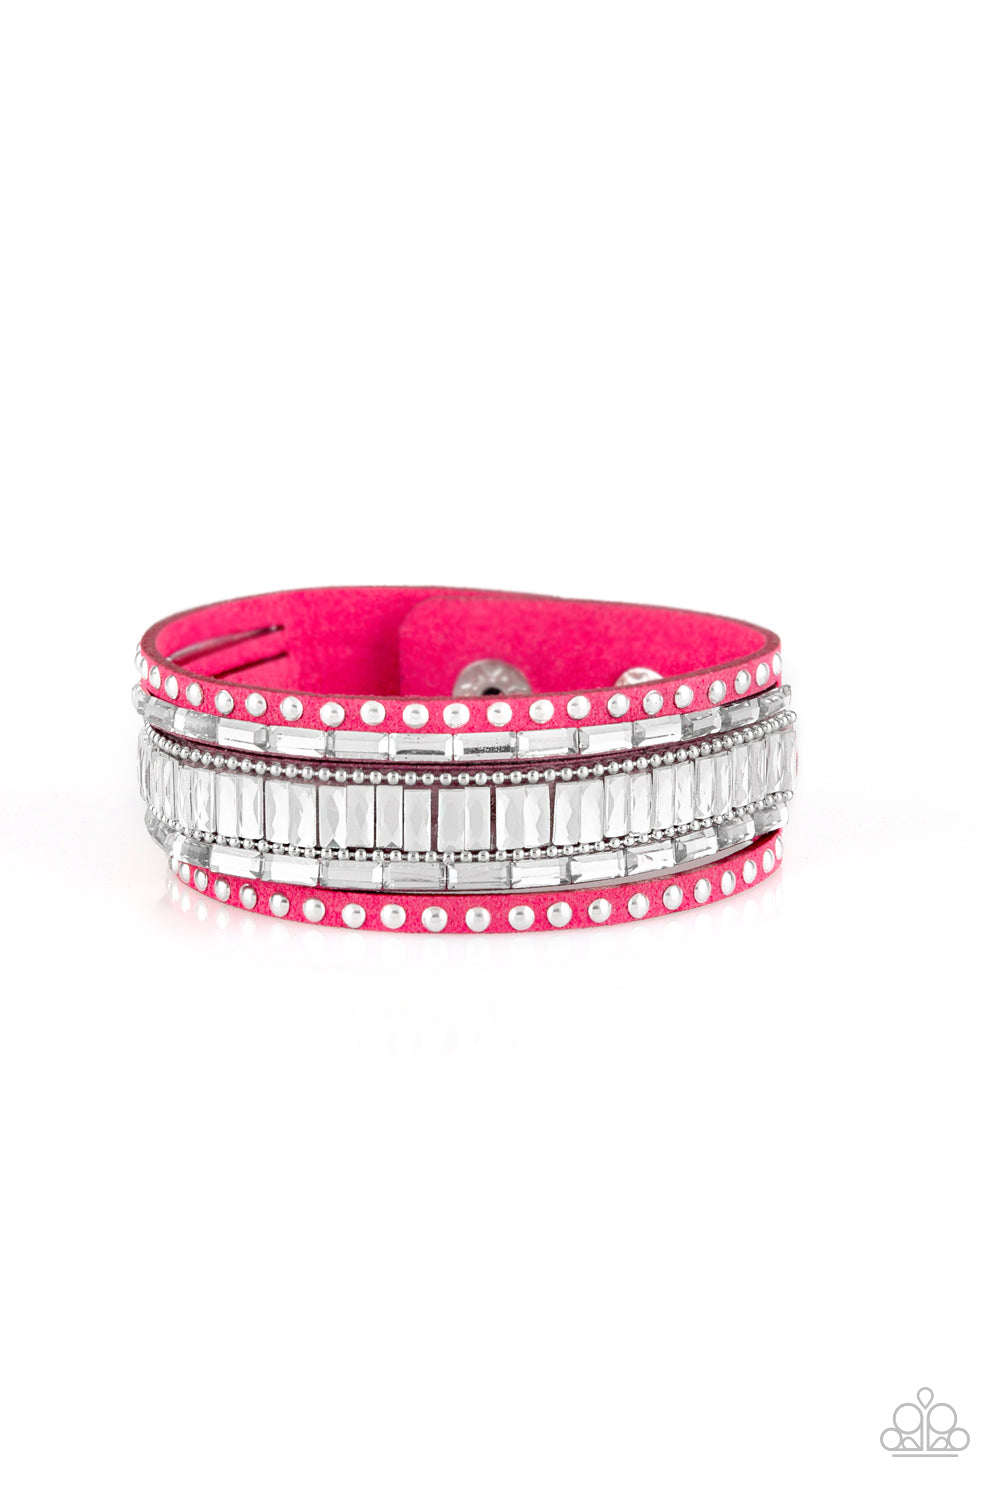 Rock Star Rocker - Pink Snap Wrap Bracelet - Princess Glam Shop